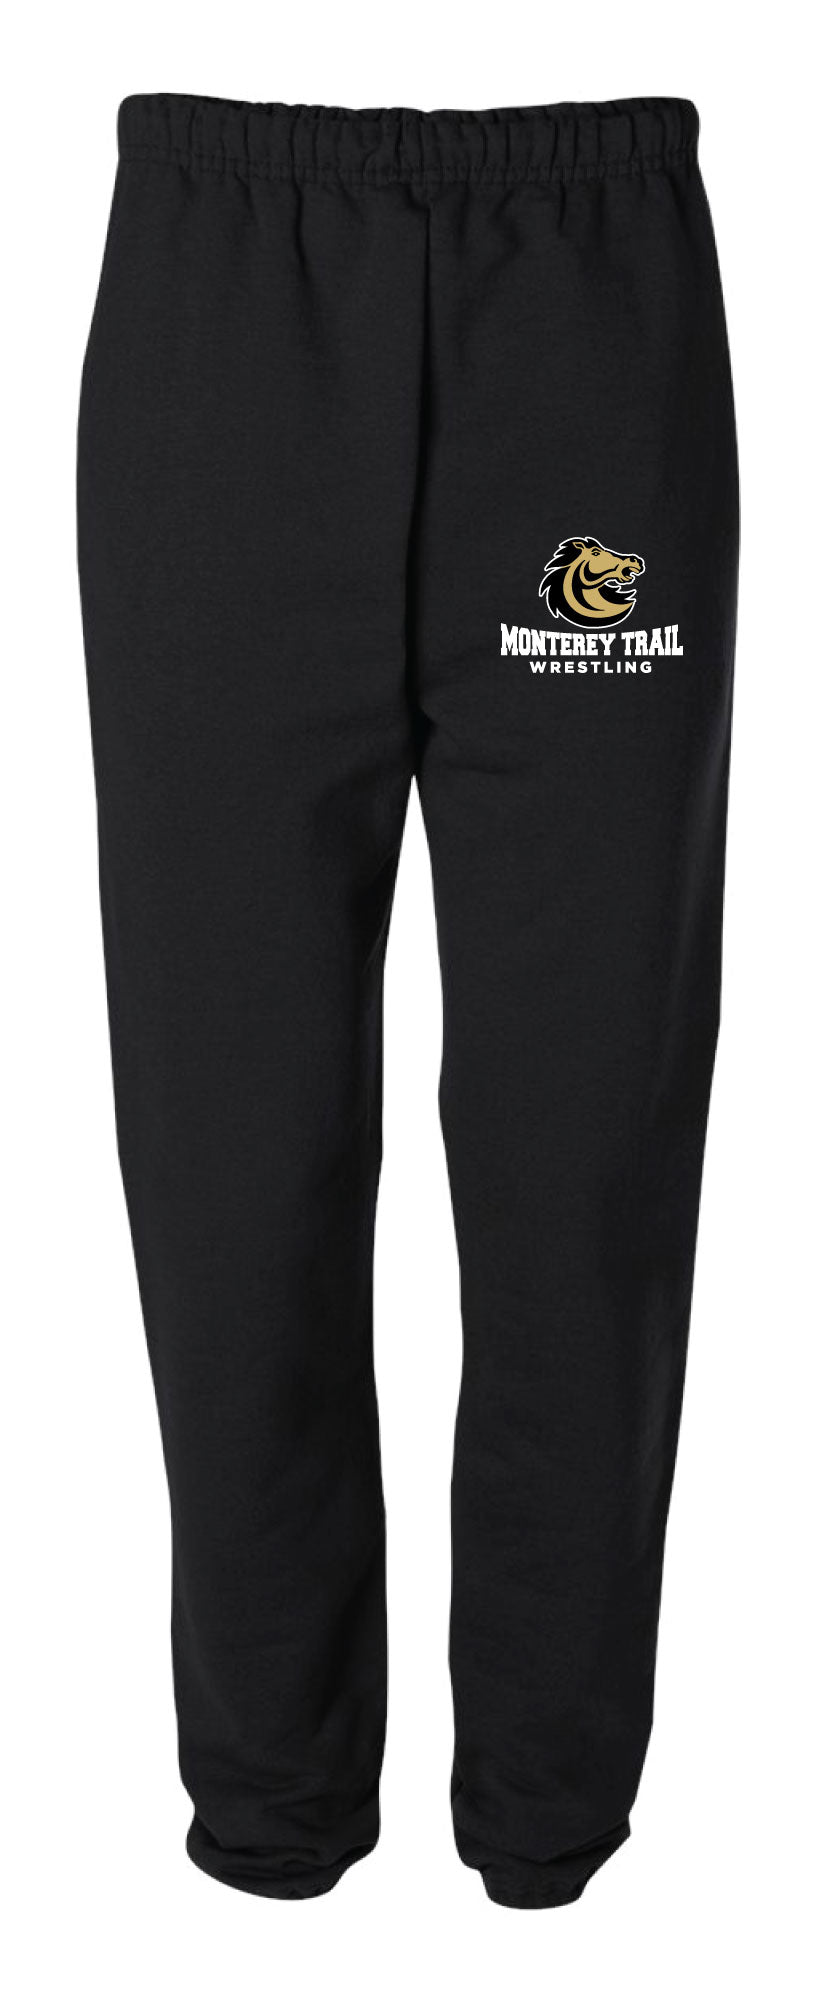 Monterey Trail Wrestling Cotton Sweatpants - Black - 5KounT2018